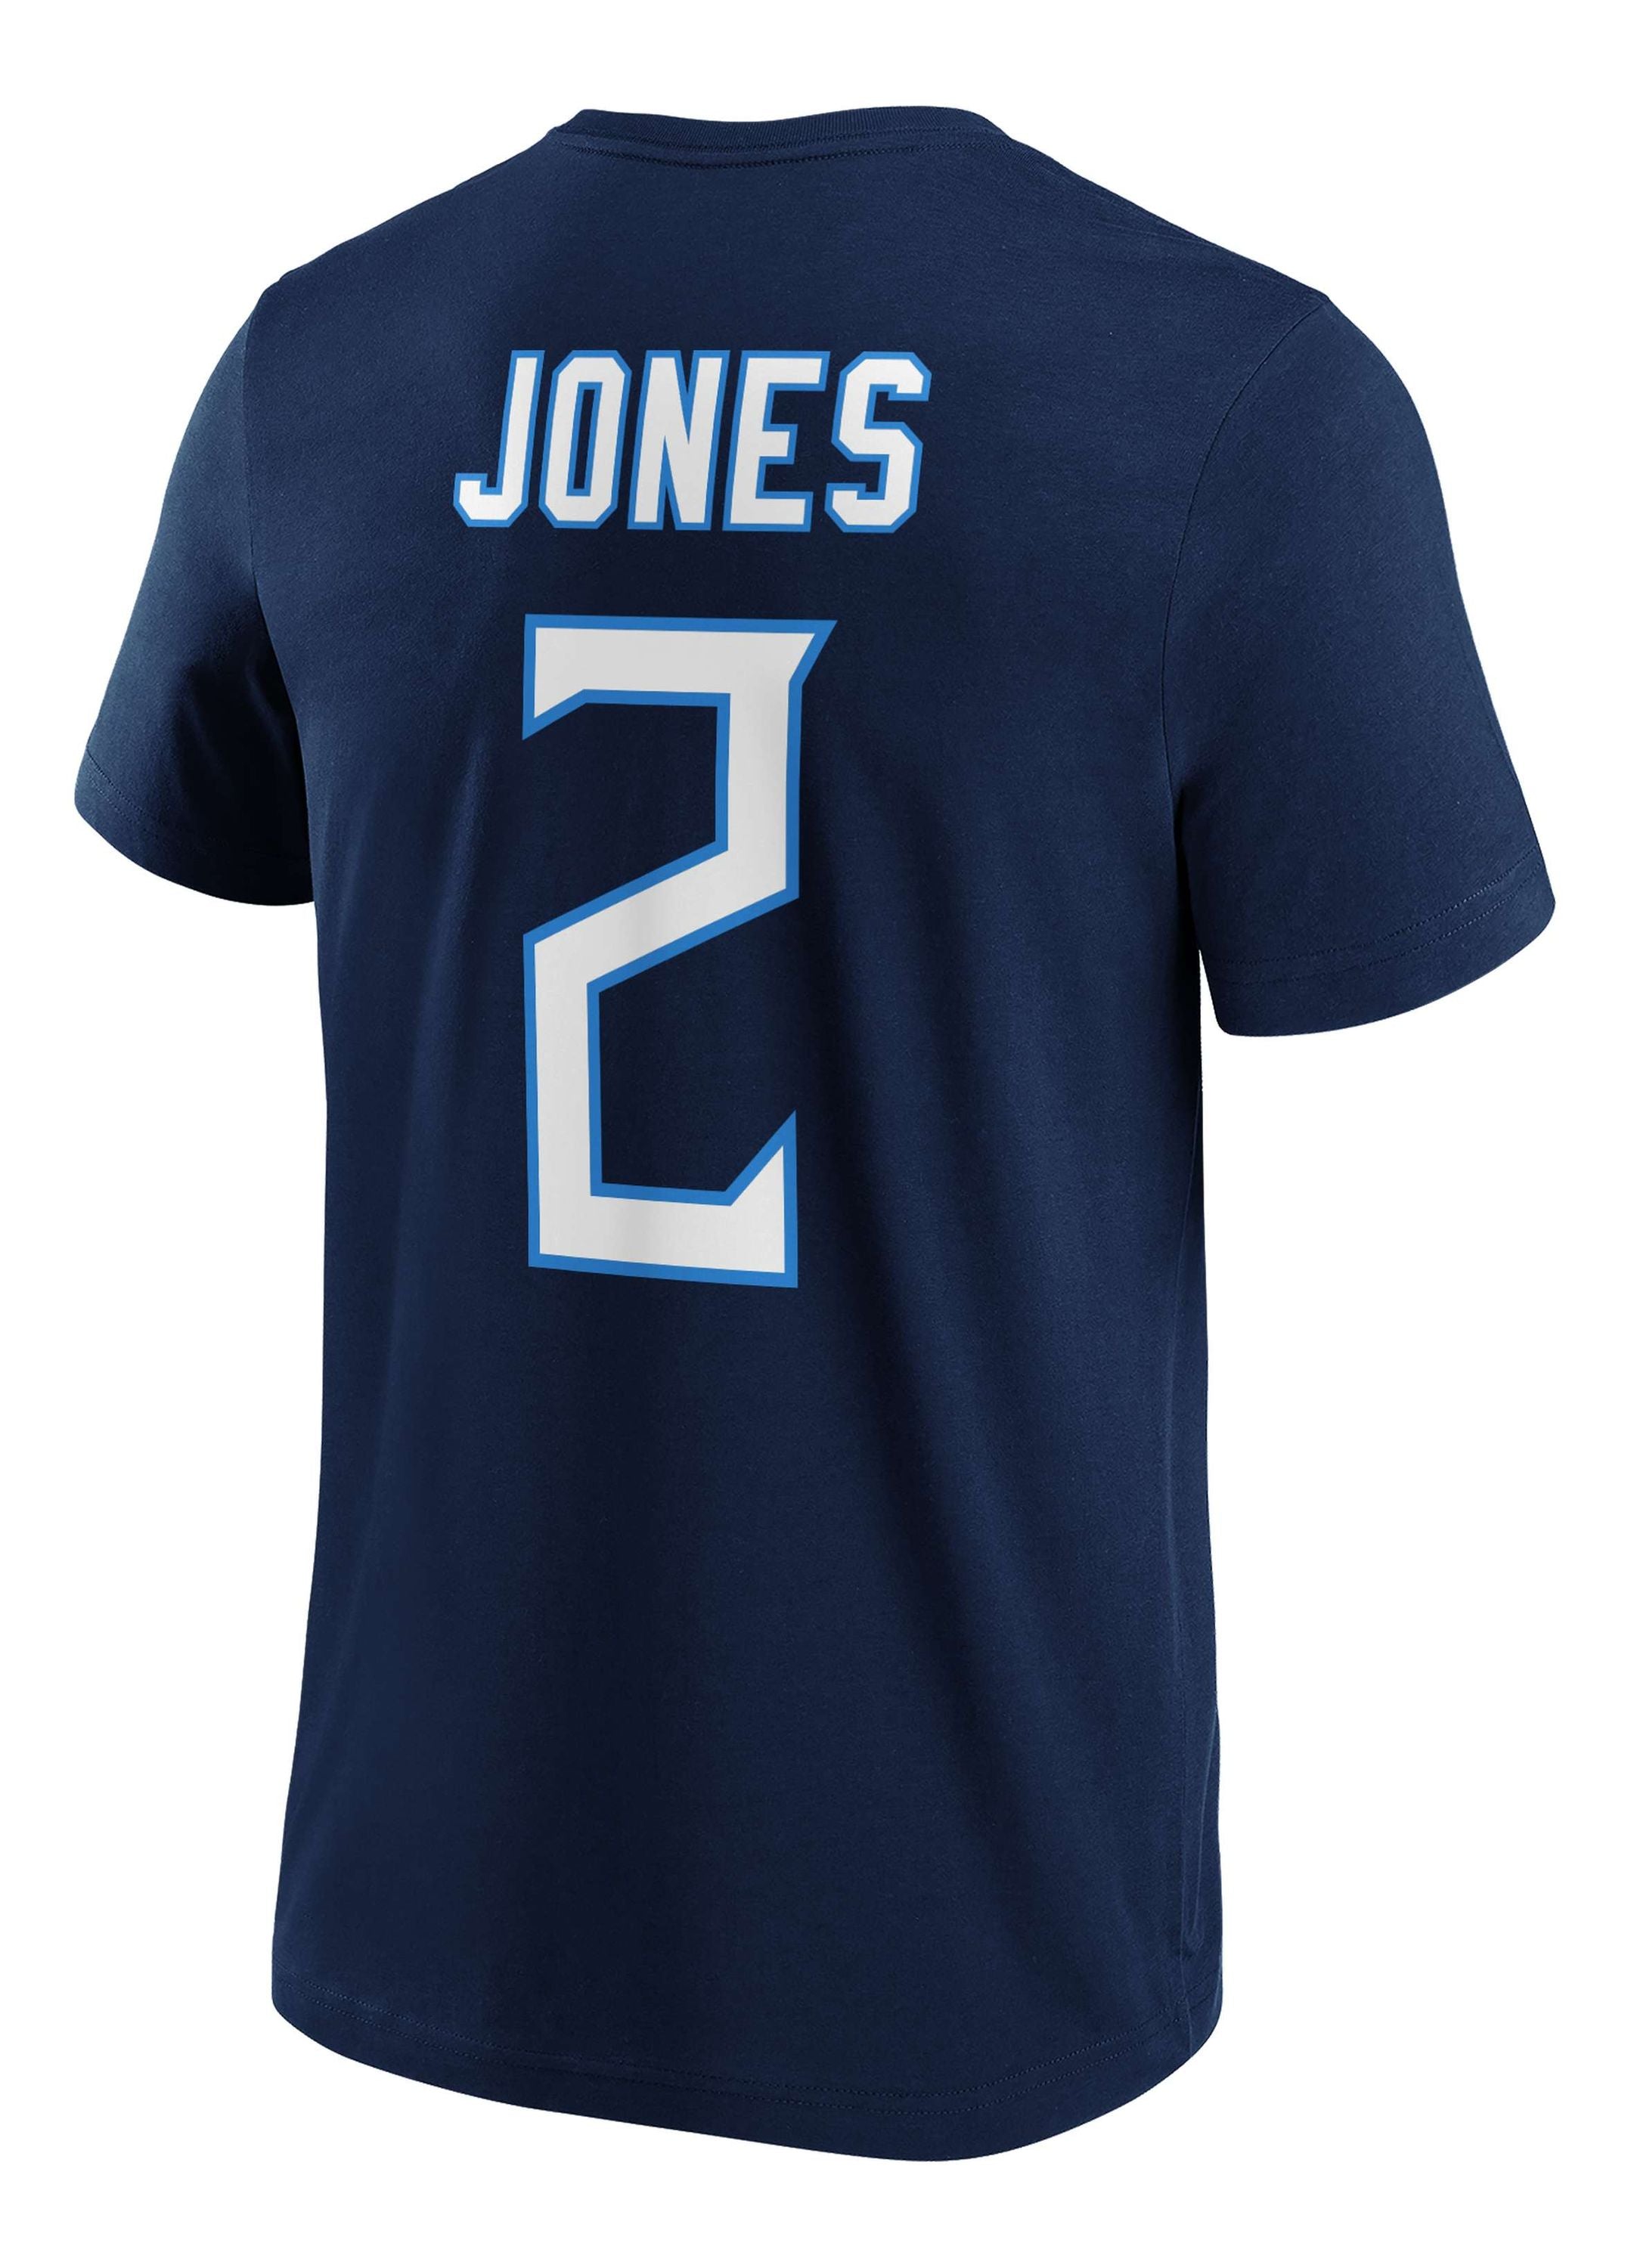 Fanatics - NFL Tennessee Titans Jones Name & Number Graphic T-Shirt - Blau